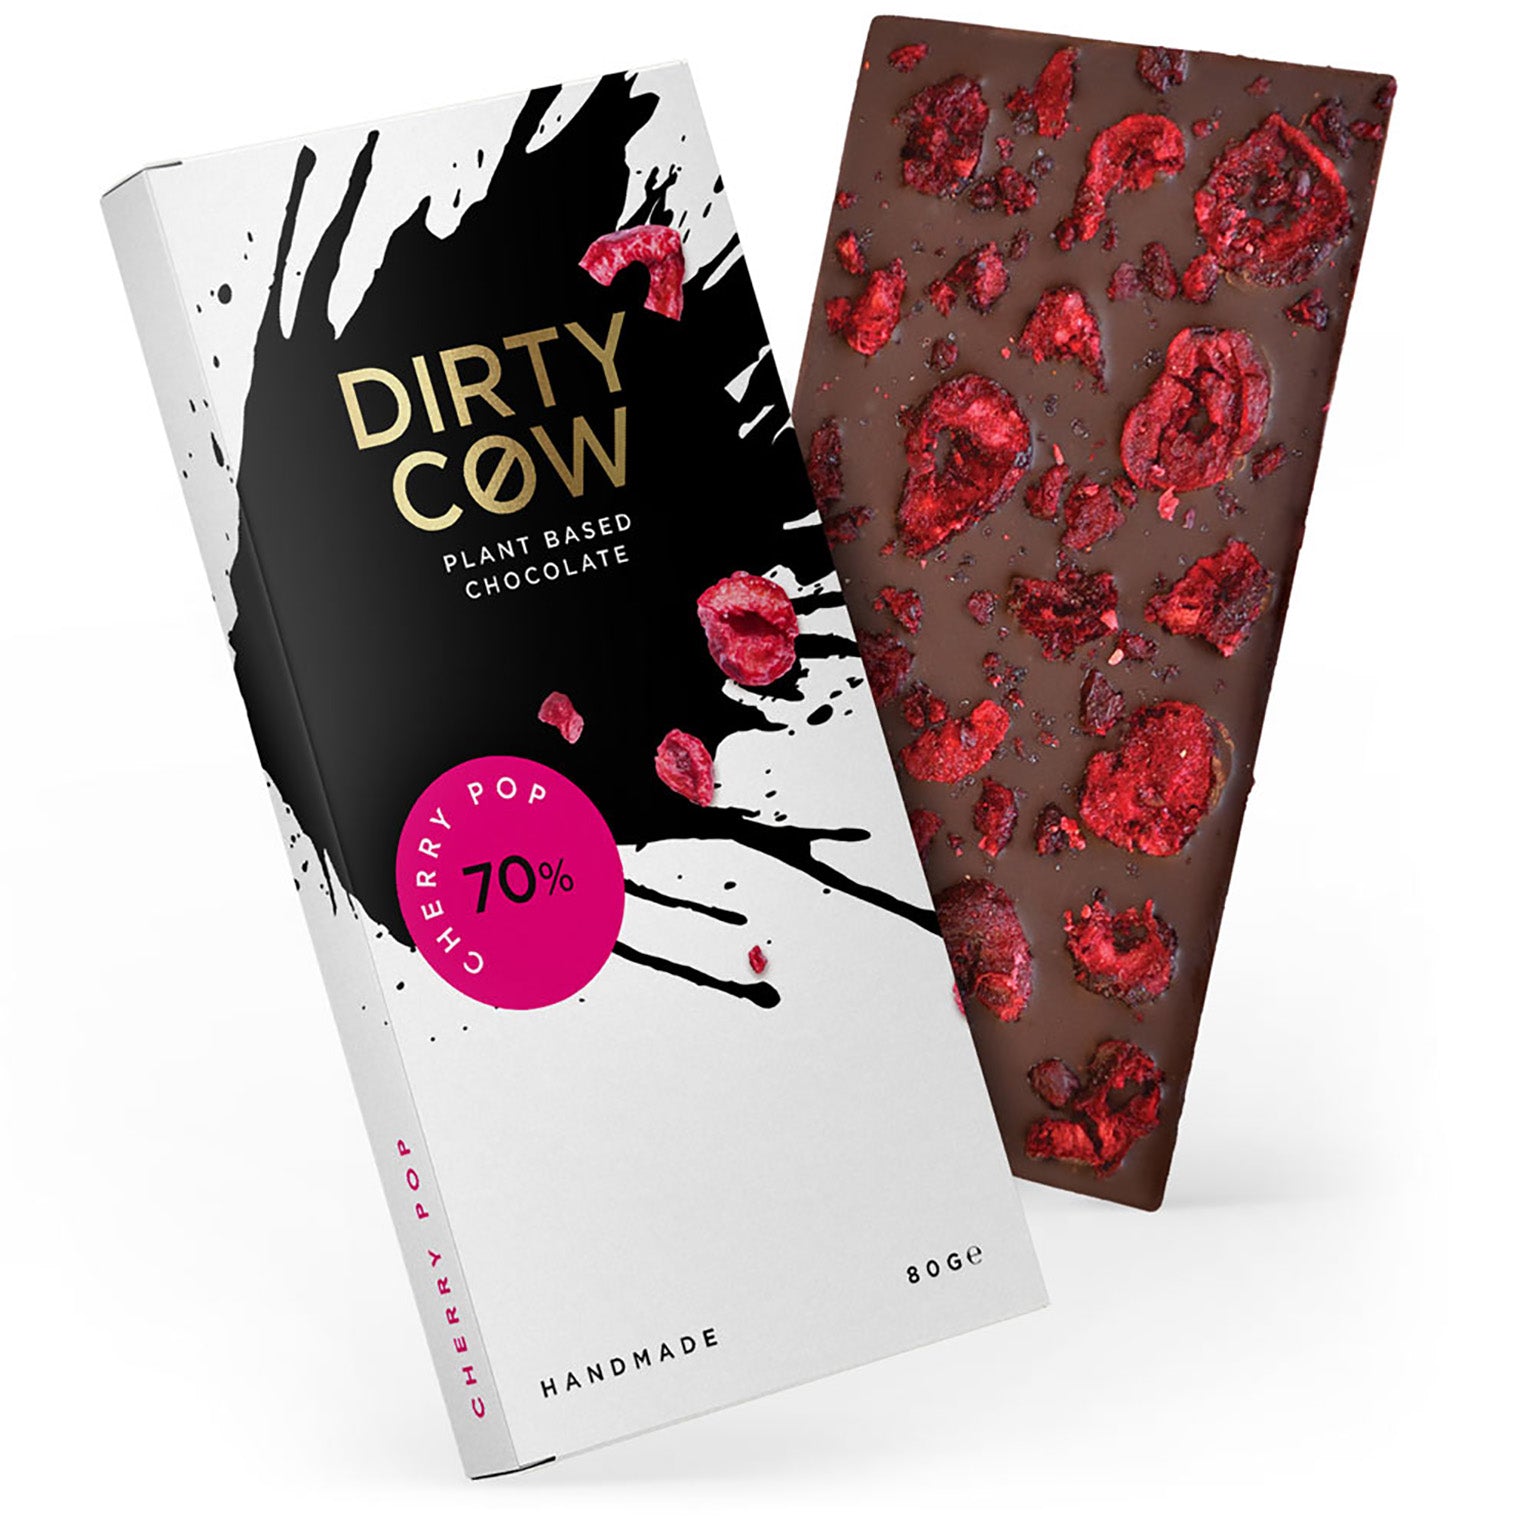 Dirty Cow Cherry Pop Plant Based Chocolate Bar (12x80g)